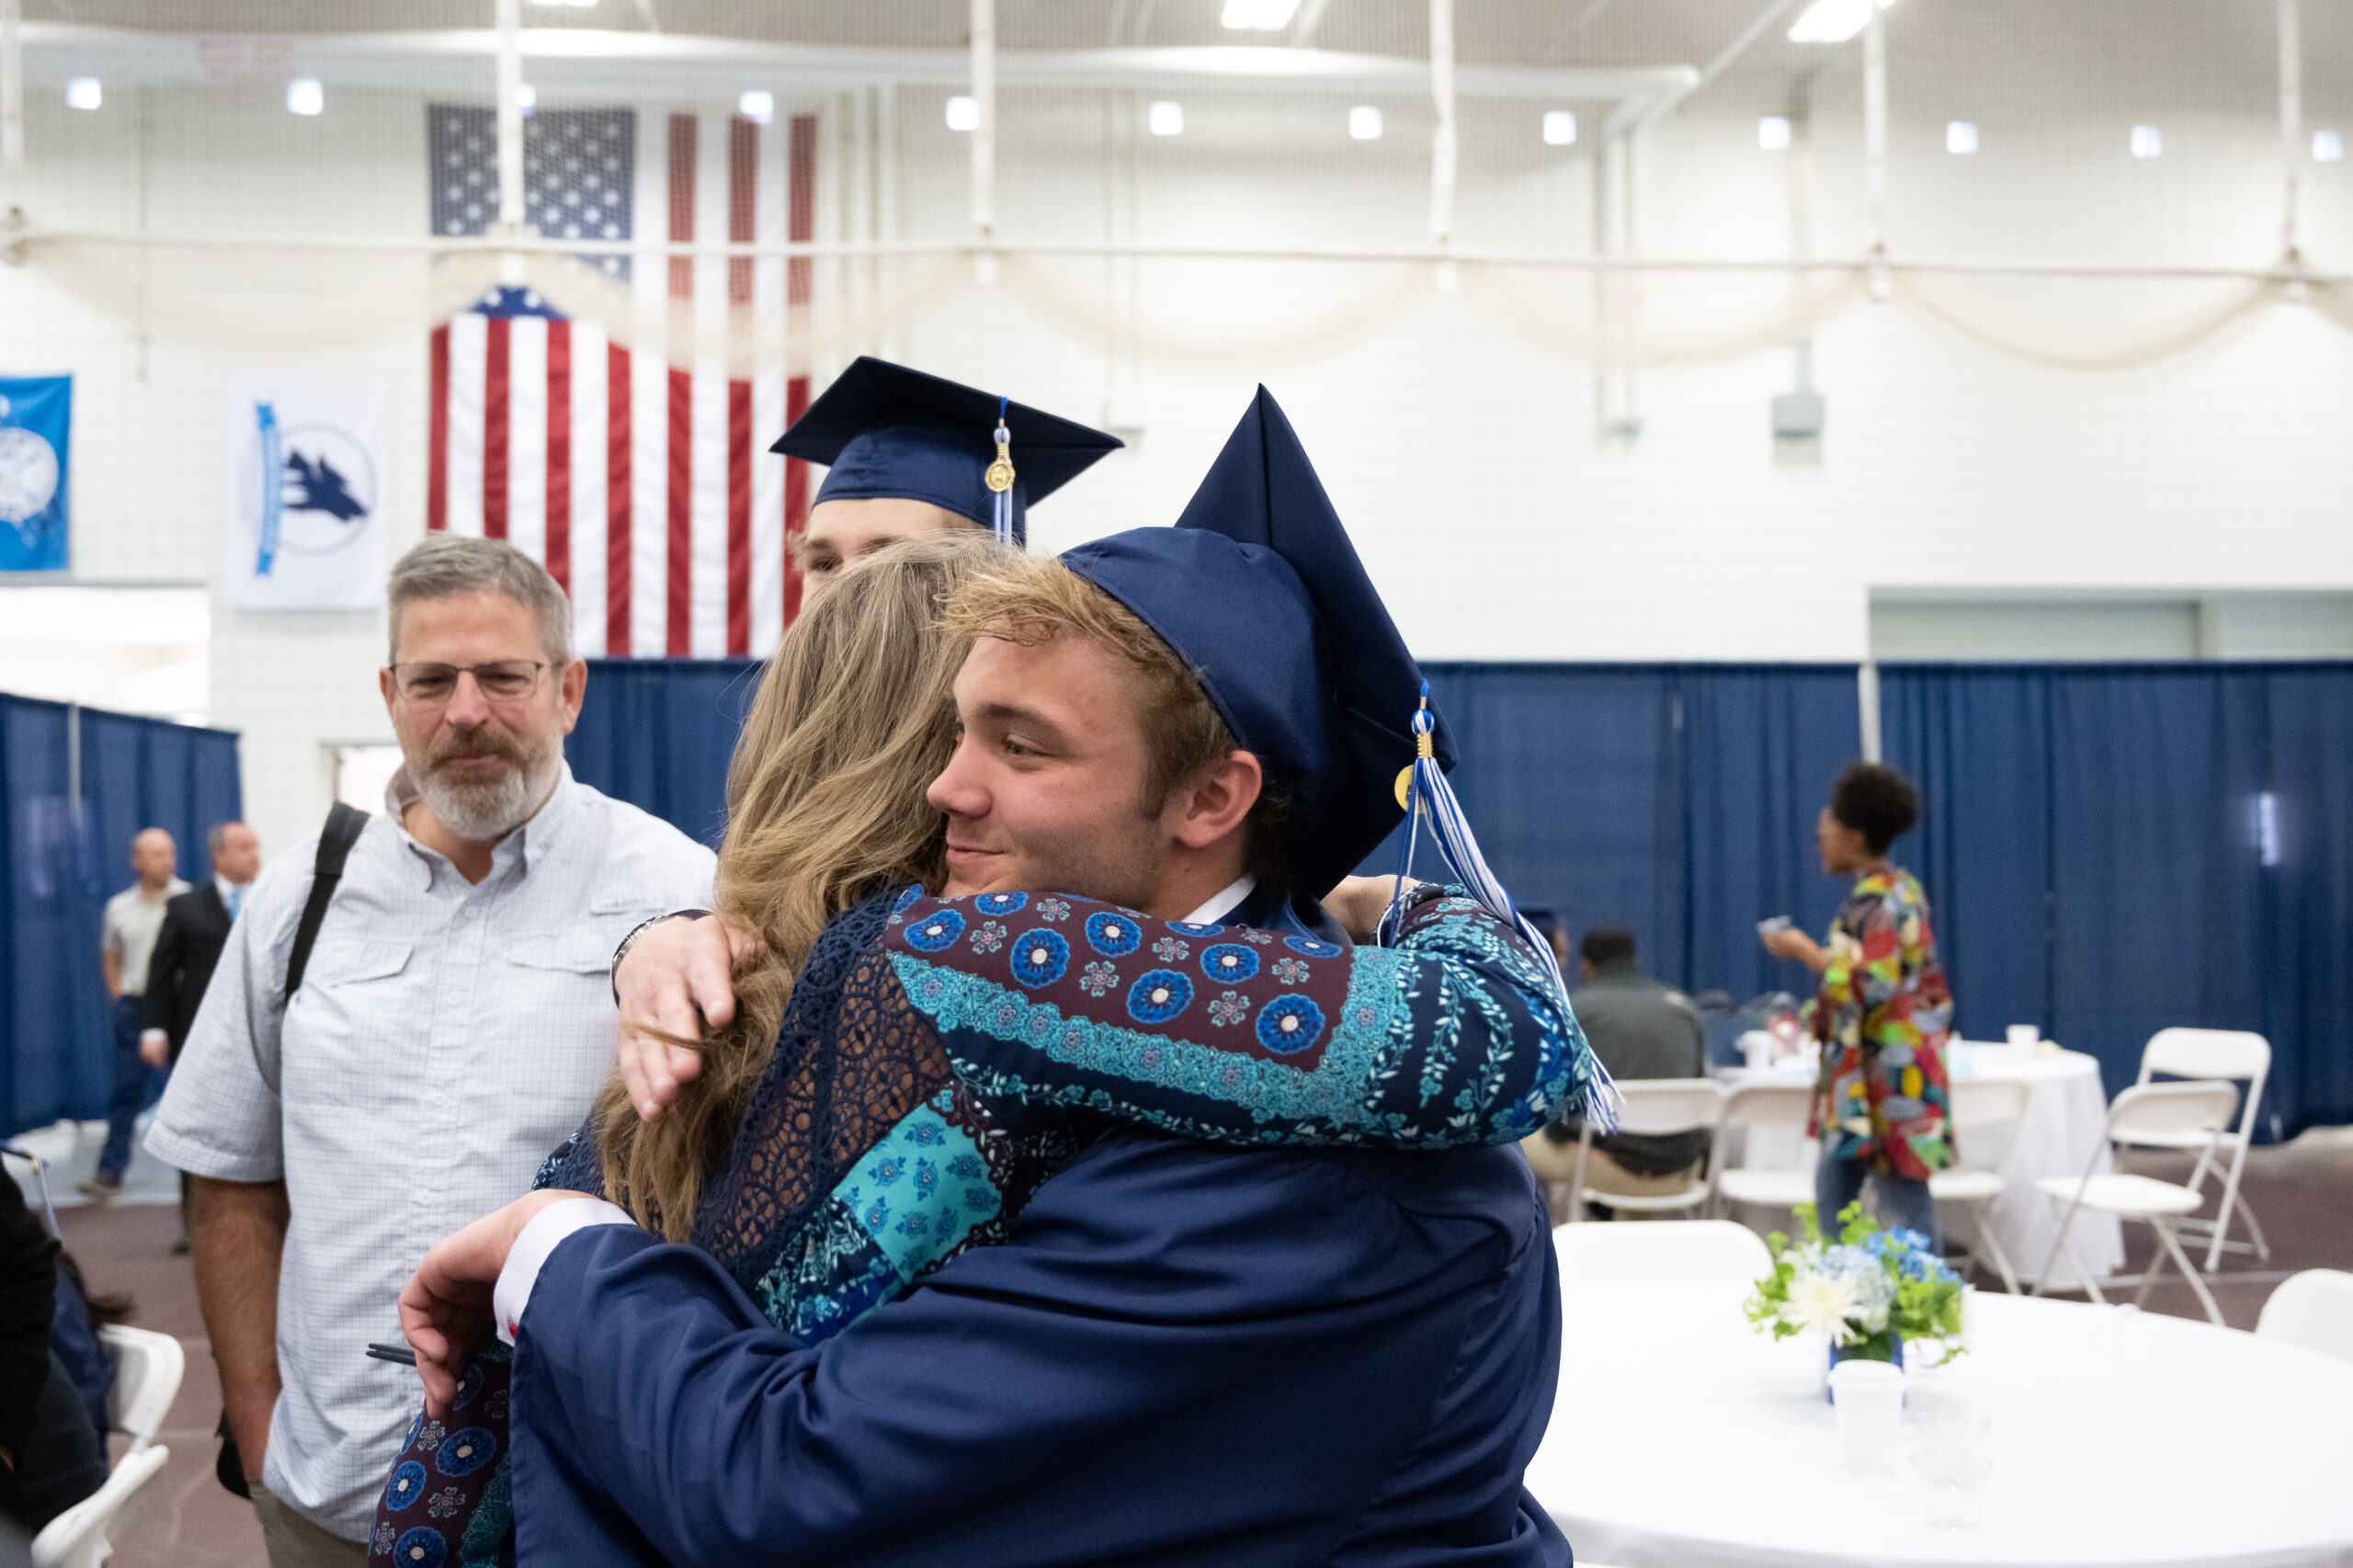 Parent hugging their student at graduation